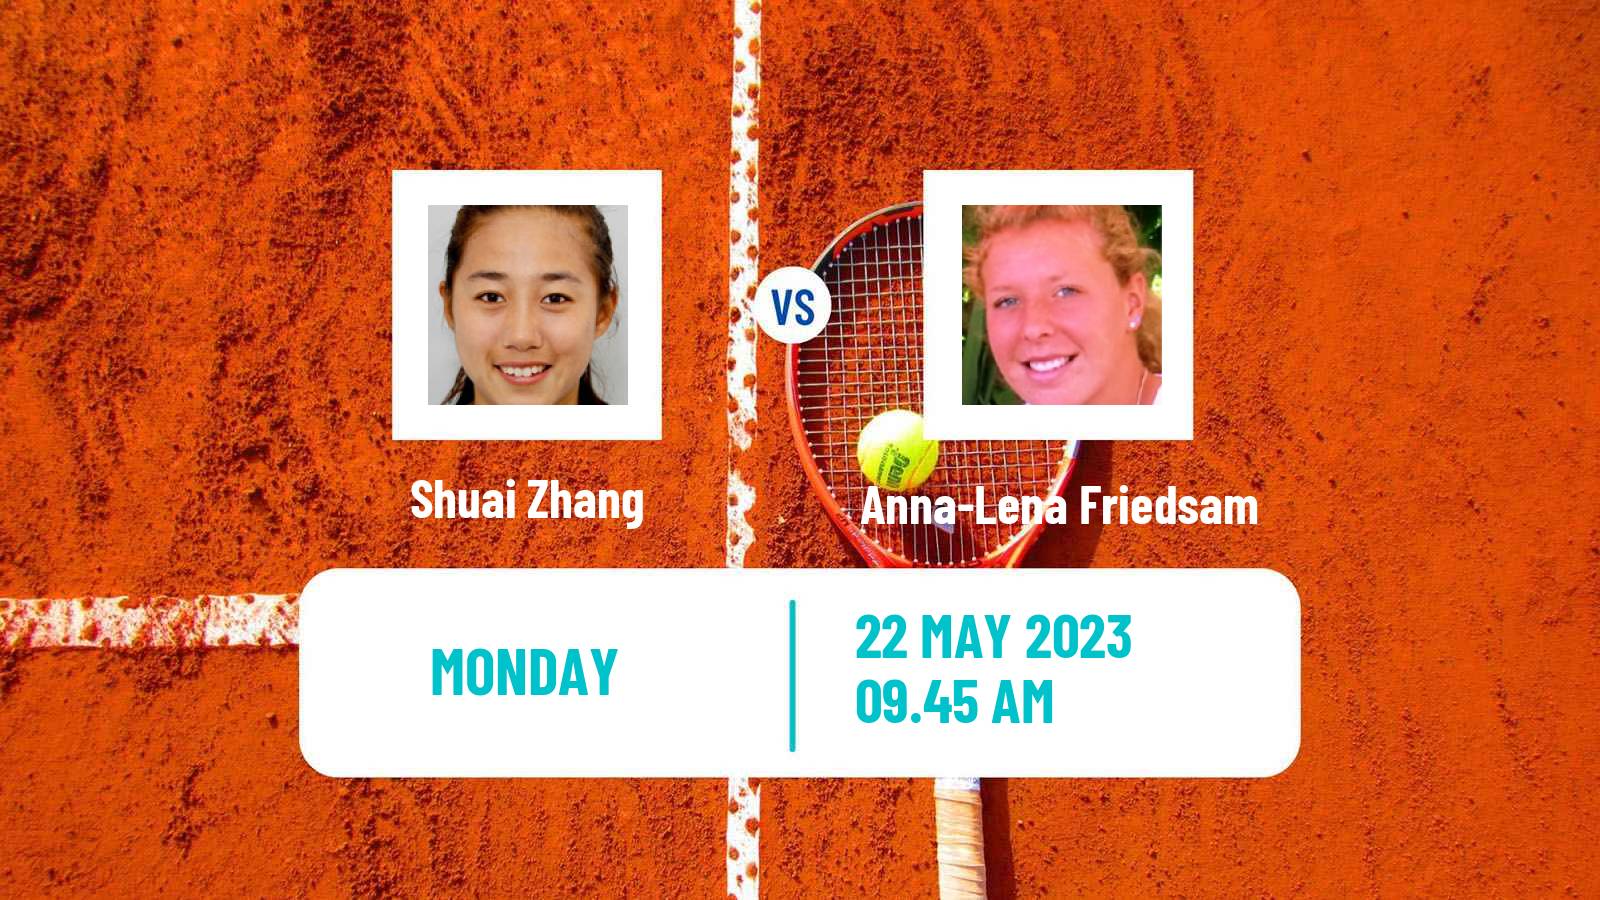 Tennis WTA Strasbourg Shuai Zhang - Anna-Lena Friedsam